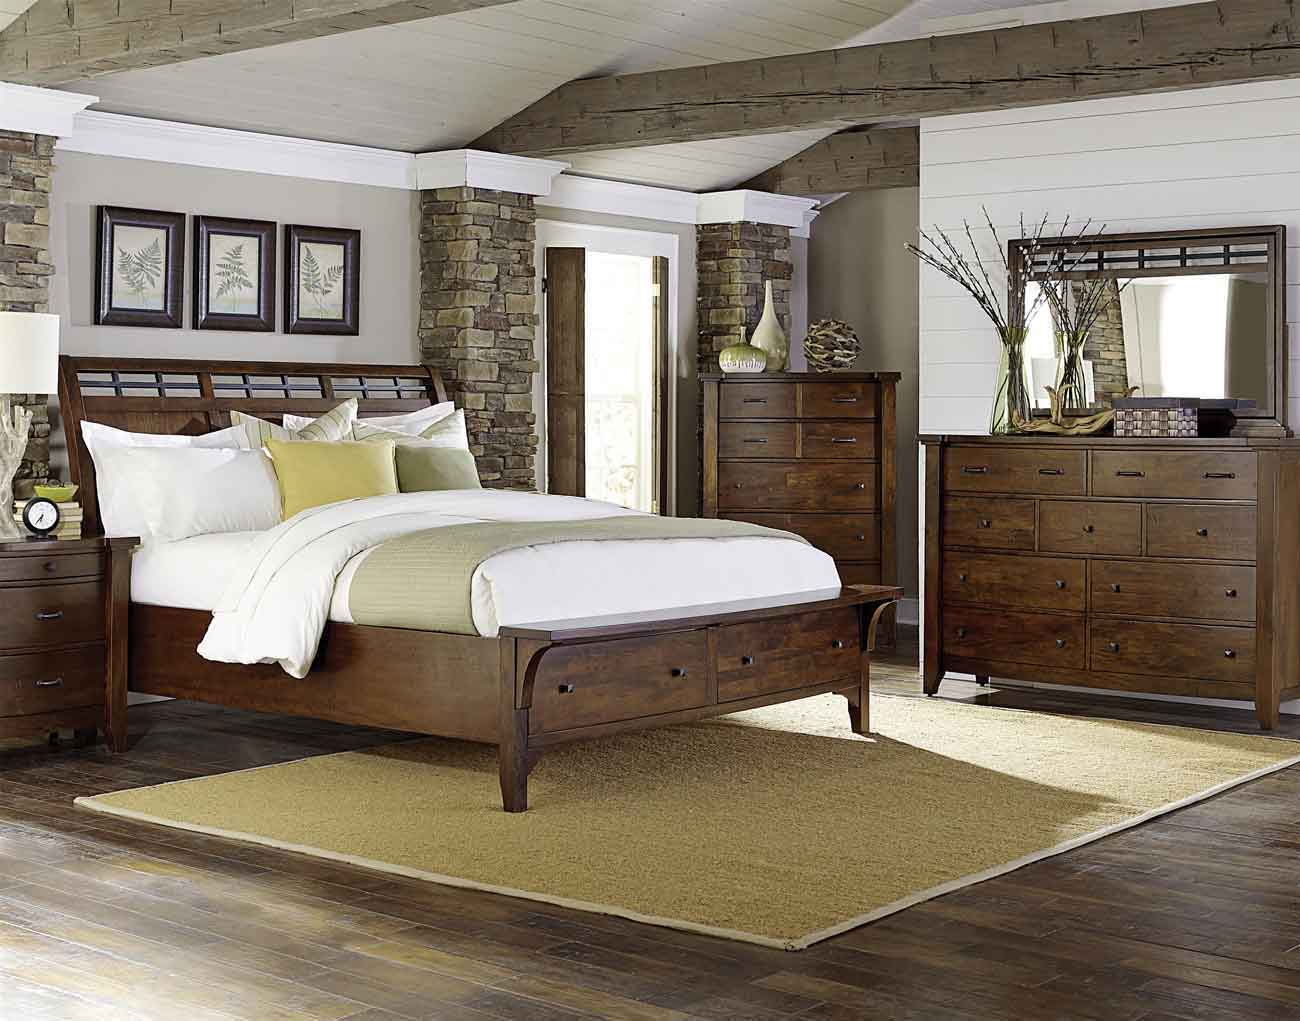 Napa Vs. Daniels Amish: Comparing Bedroom Furniture Brands 